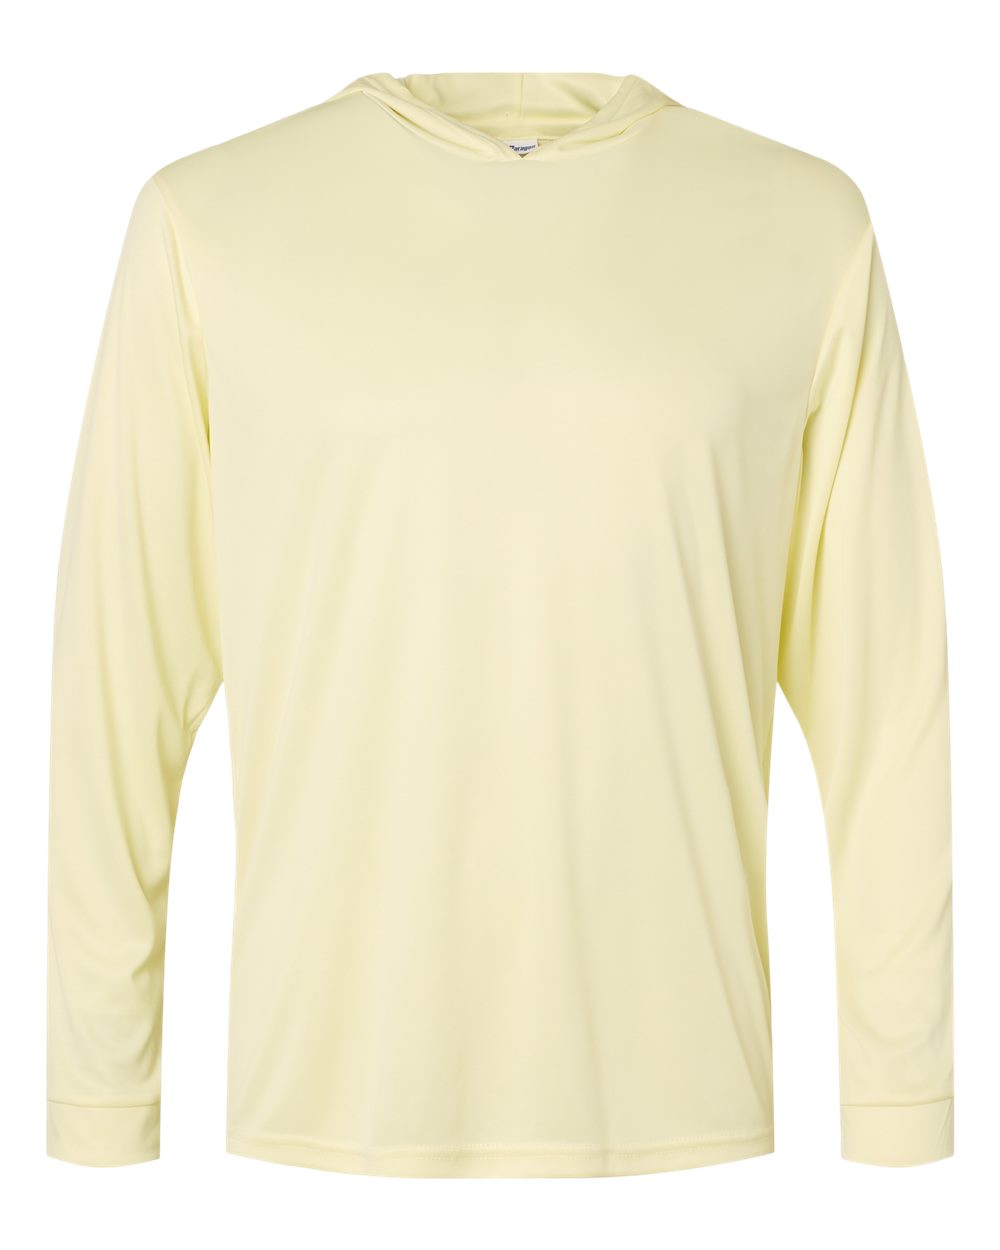 Paragon - Bahama Performance Hooded Long Sleeve T-Shirt - 220. XS-4XL